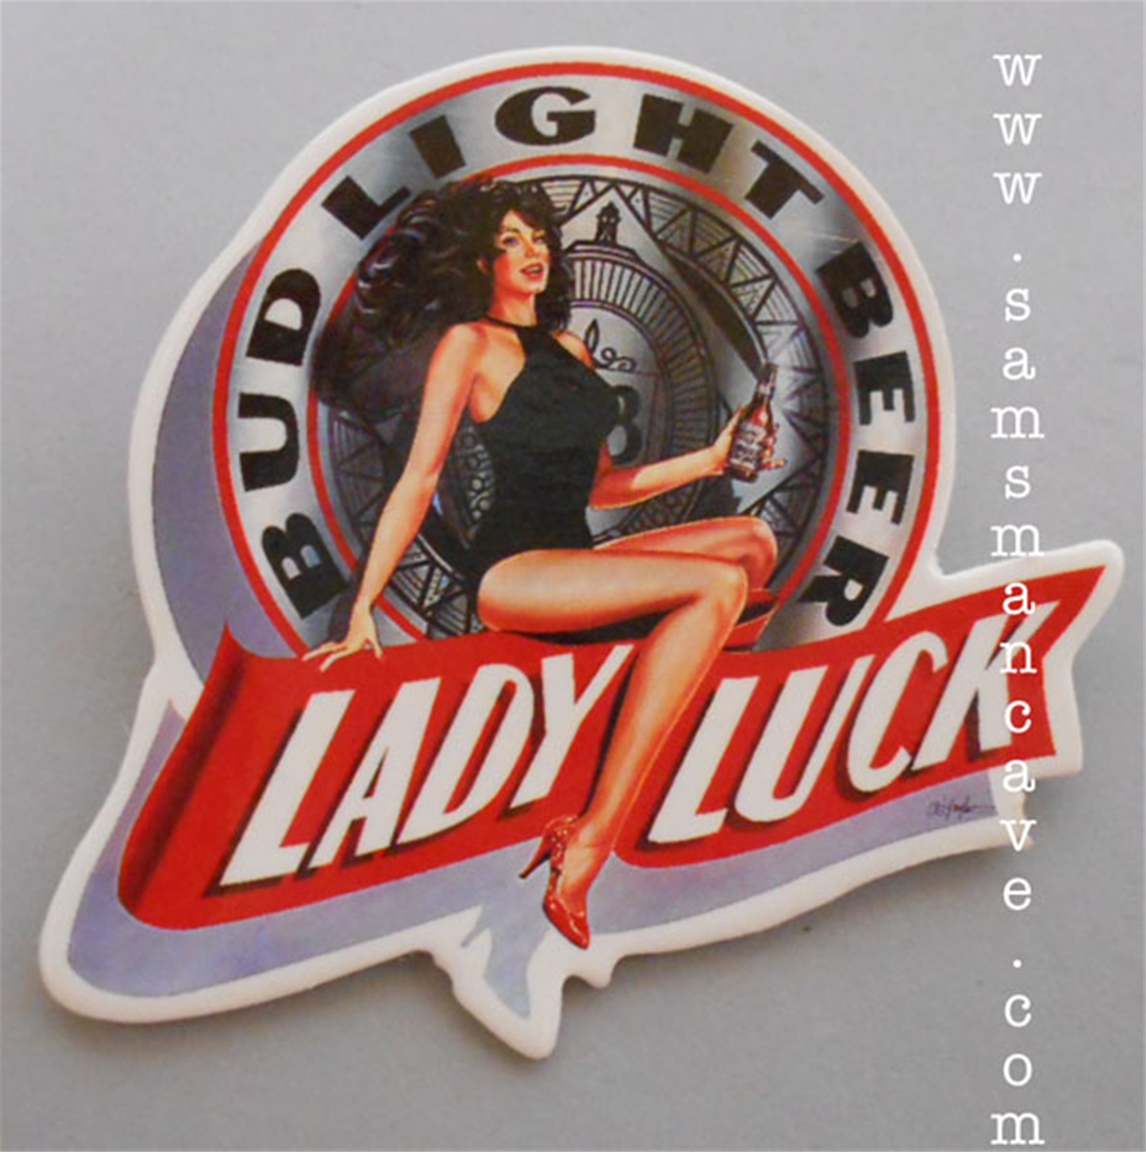 Bud Light Lady Luck Pin